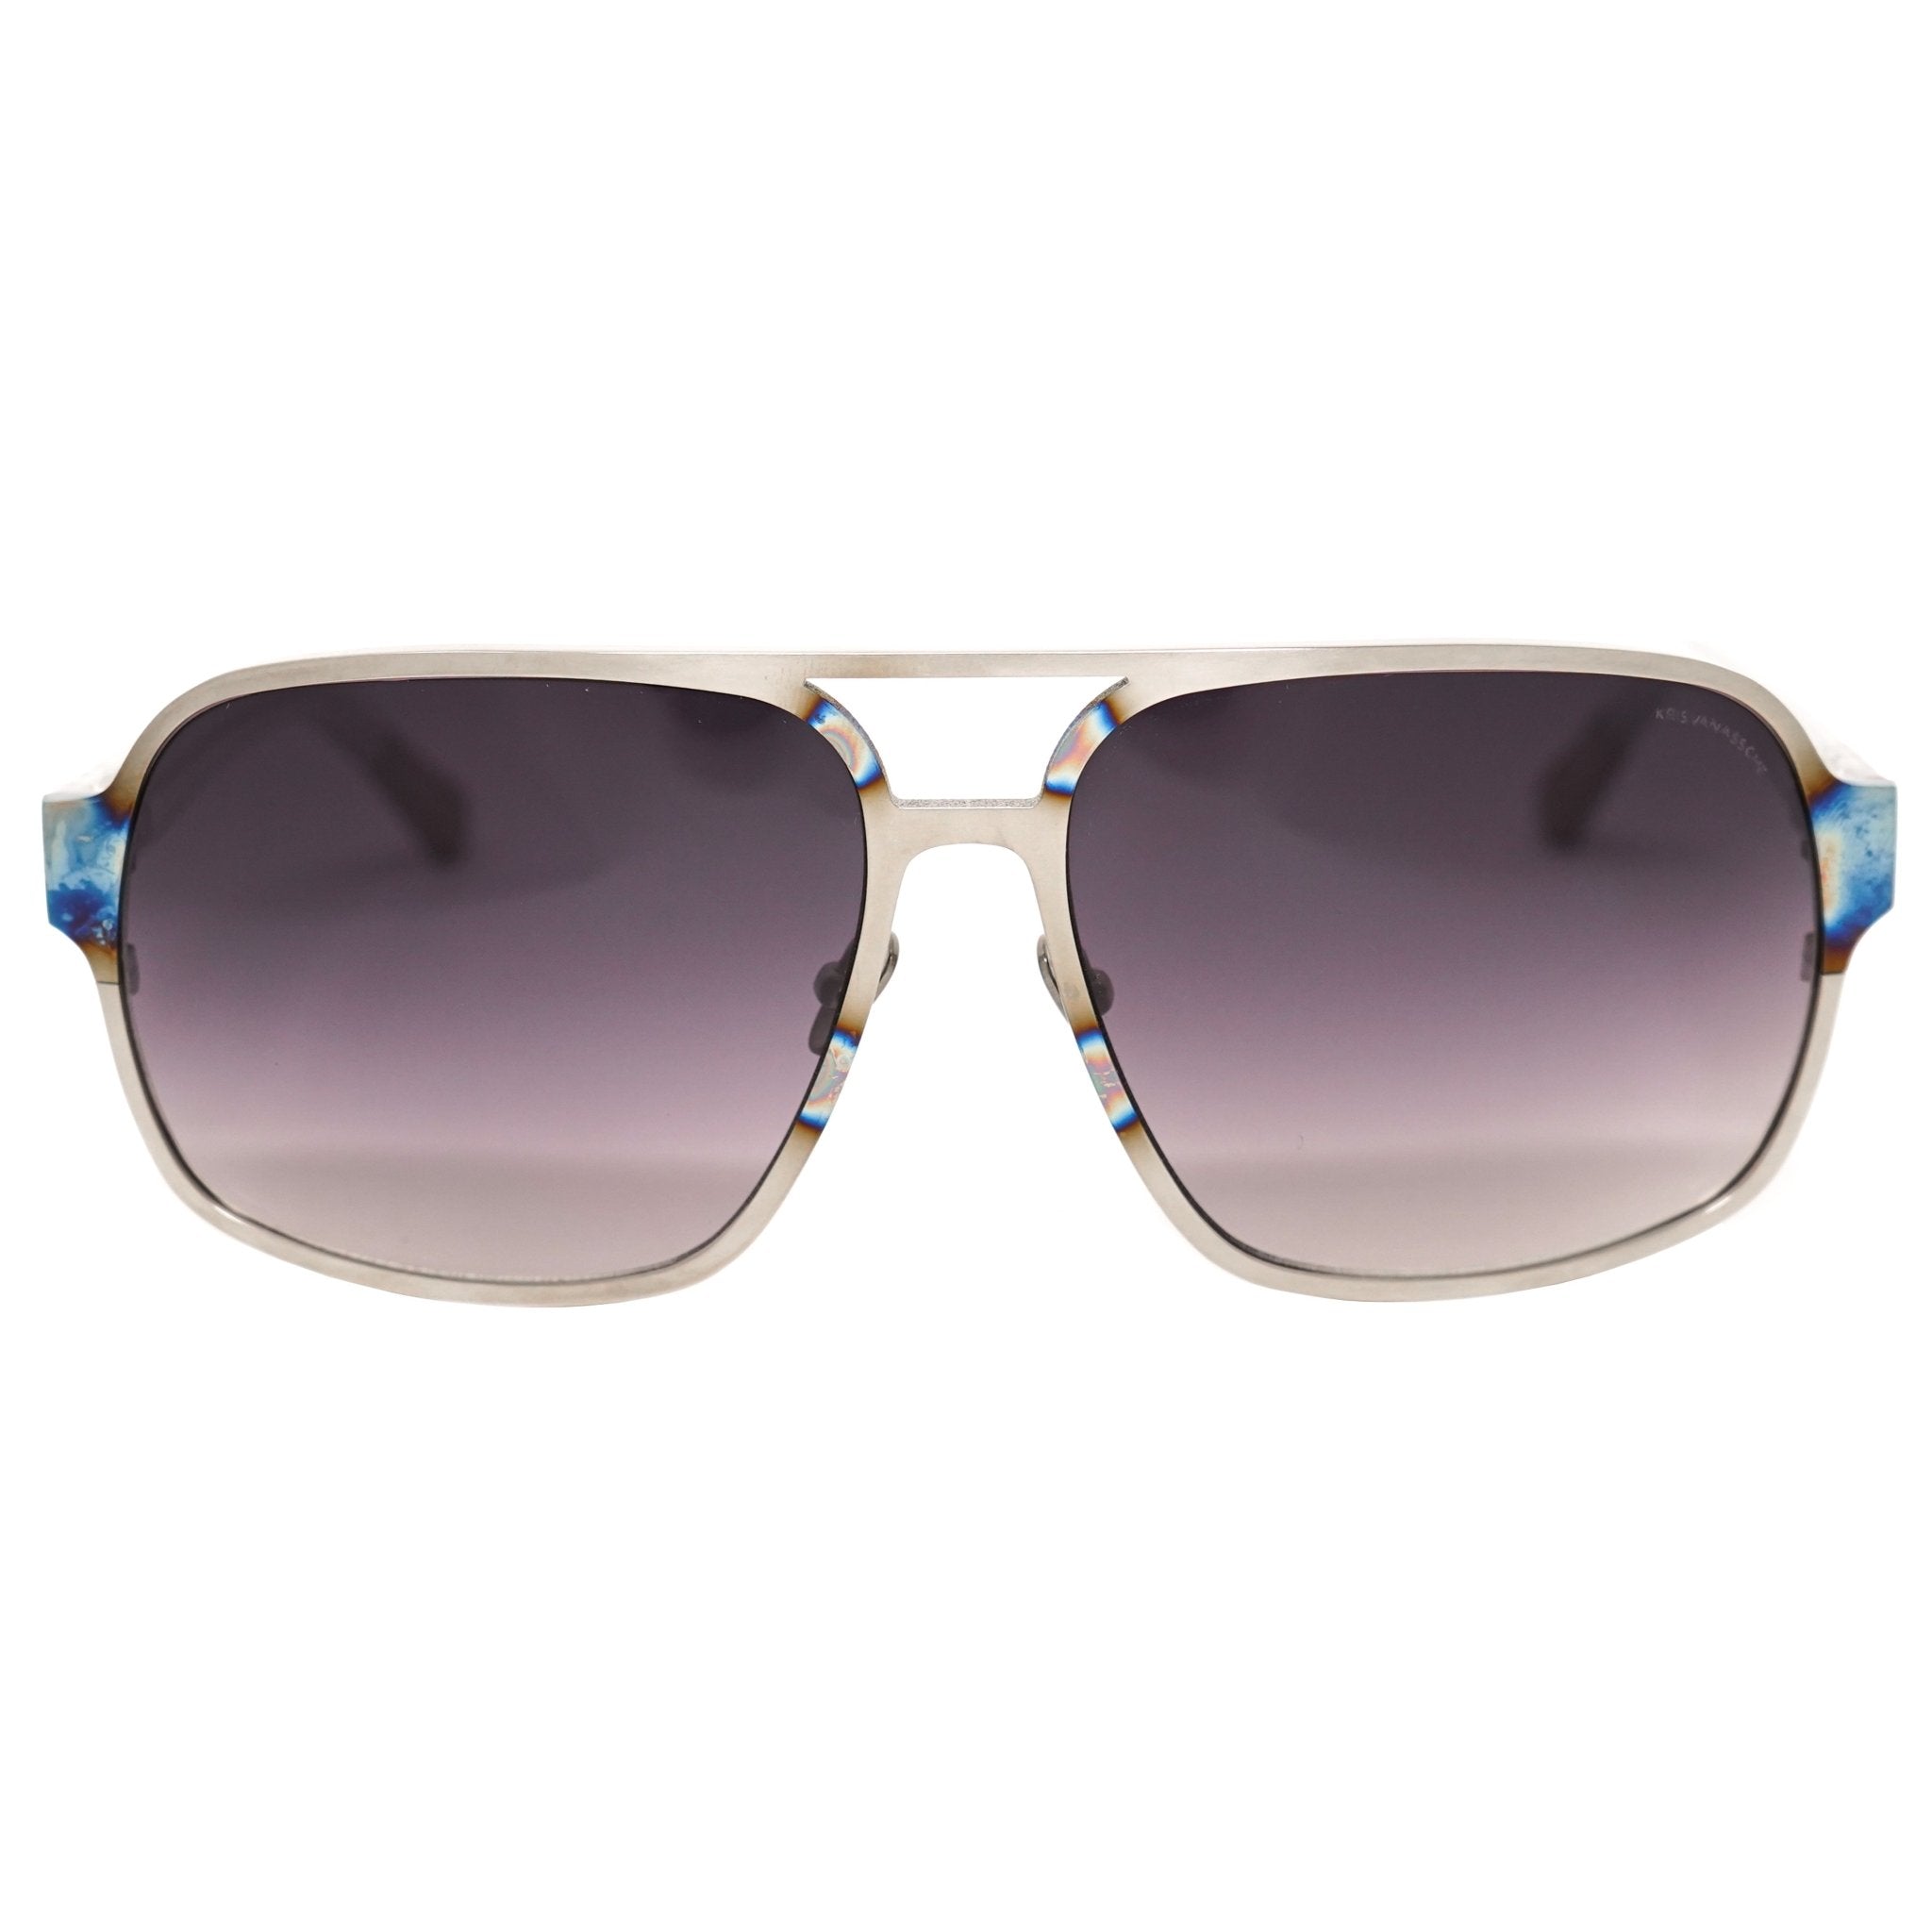 kris van assche sunglasses rectangular purple and metalic silver 885282 f1d09202 12c3 4b21 ad2a 2de722167418